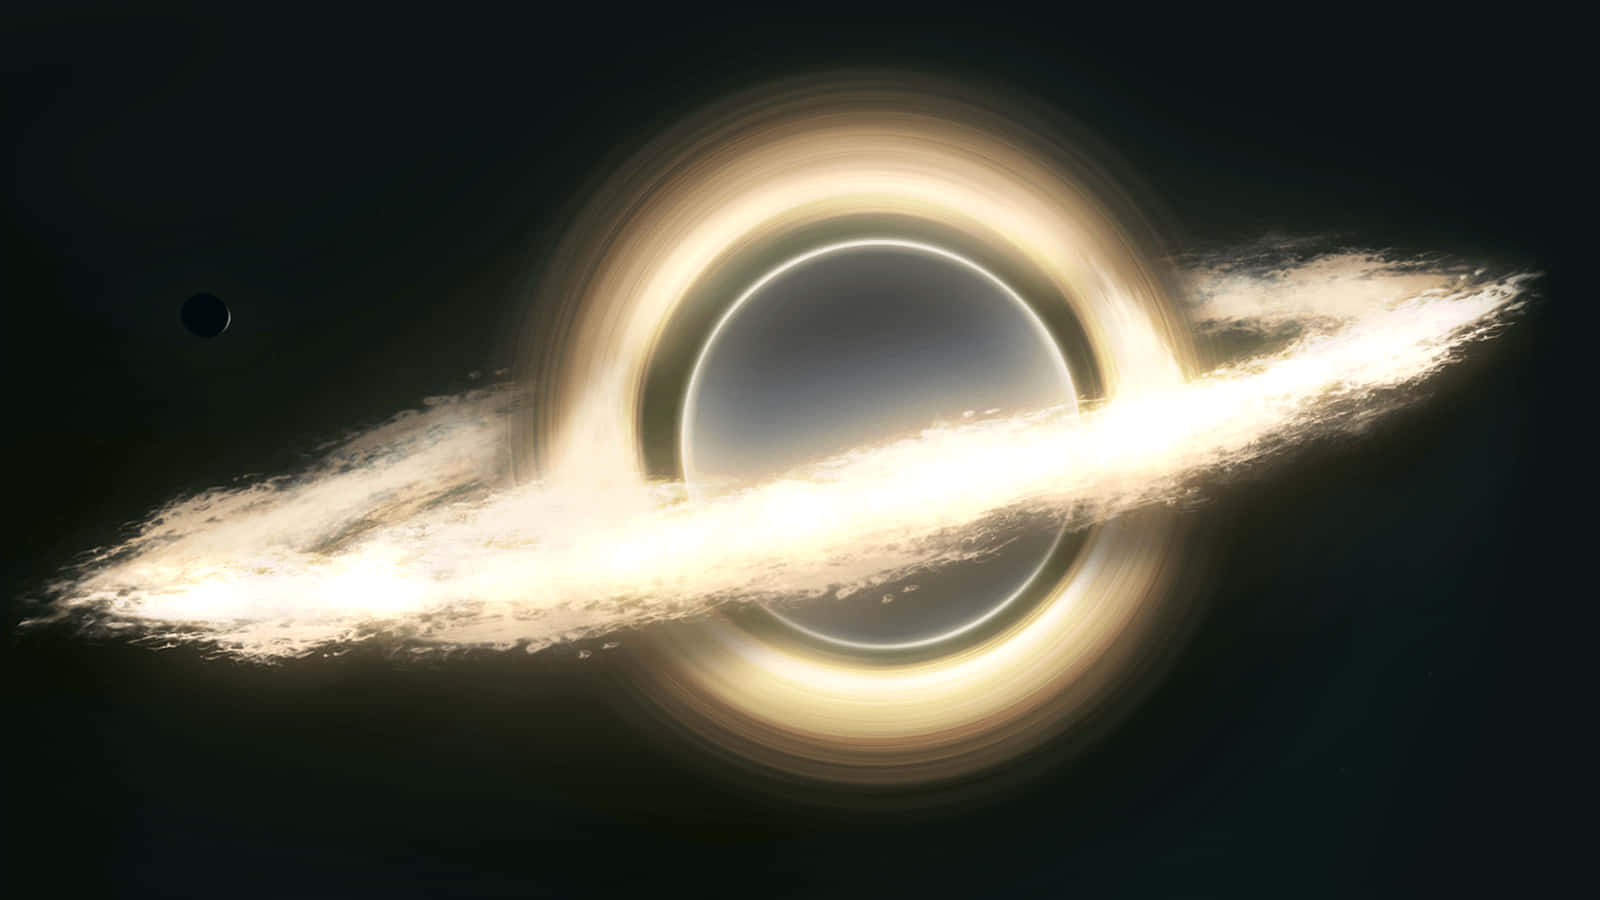 “The Mysterious Interstellar Black Hole” Wallpaper